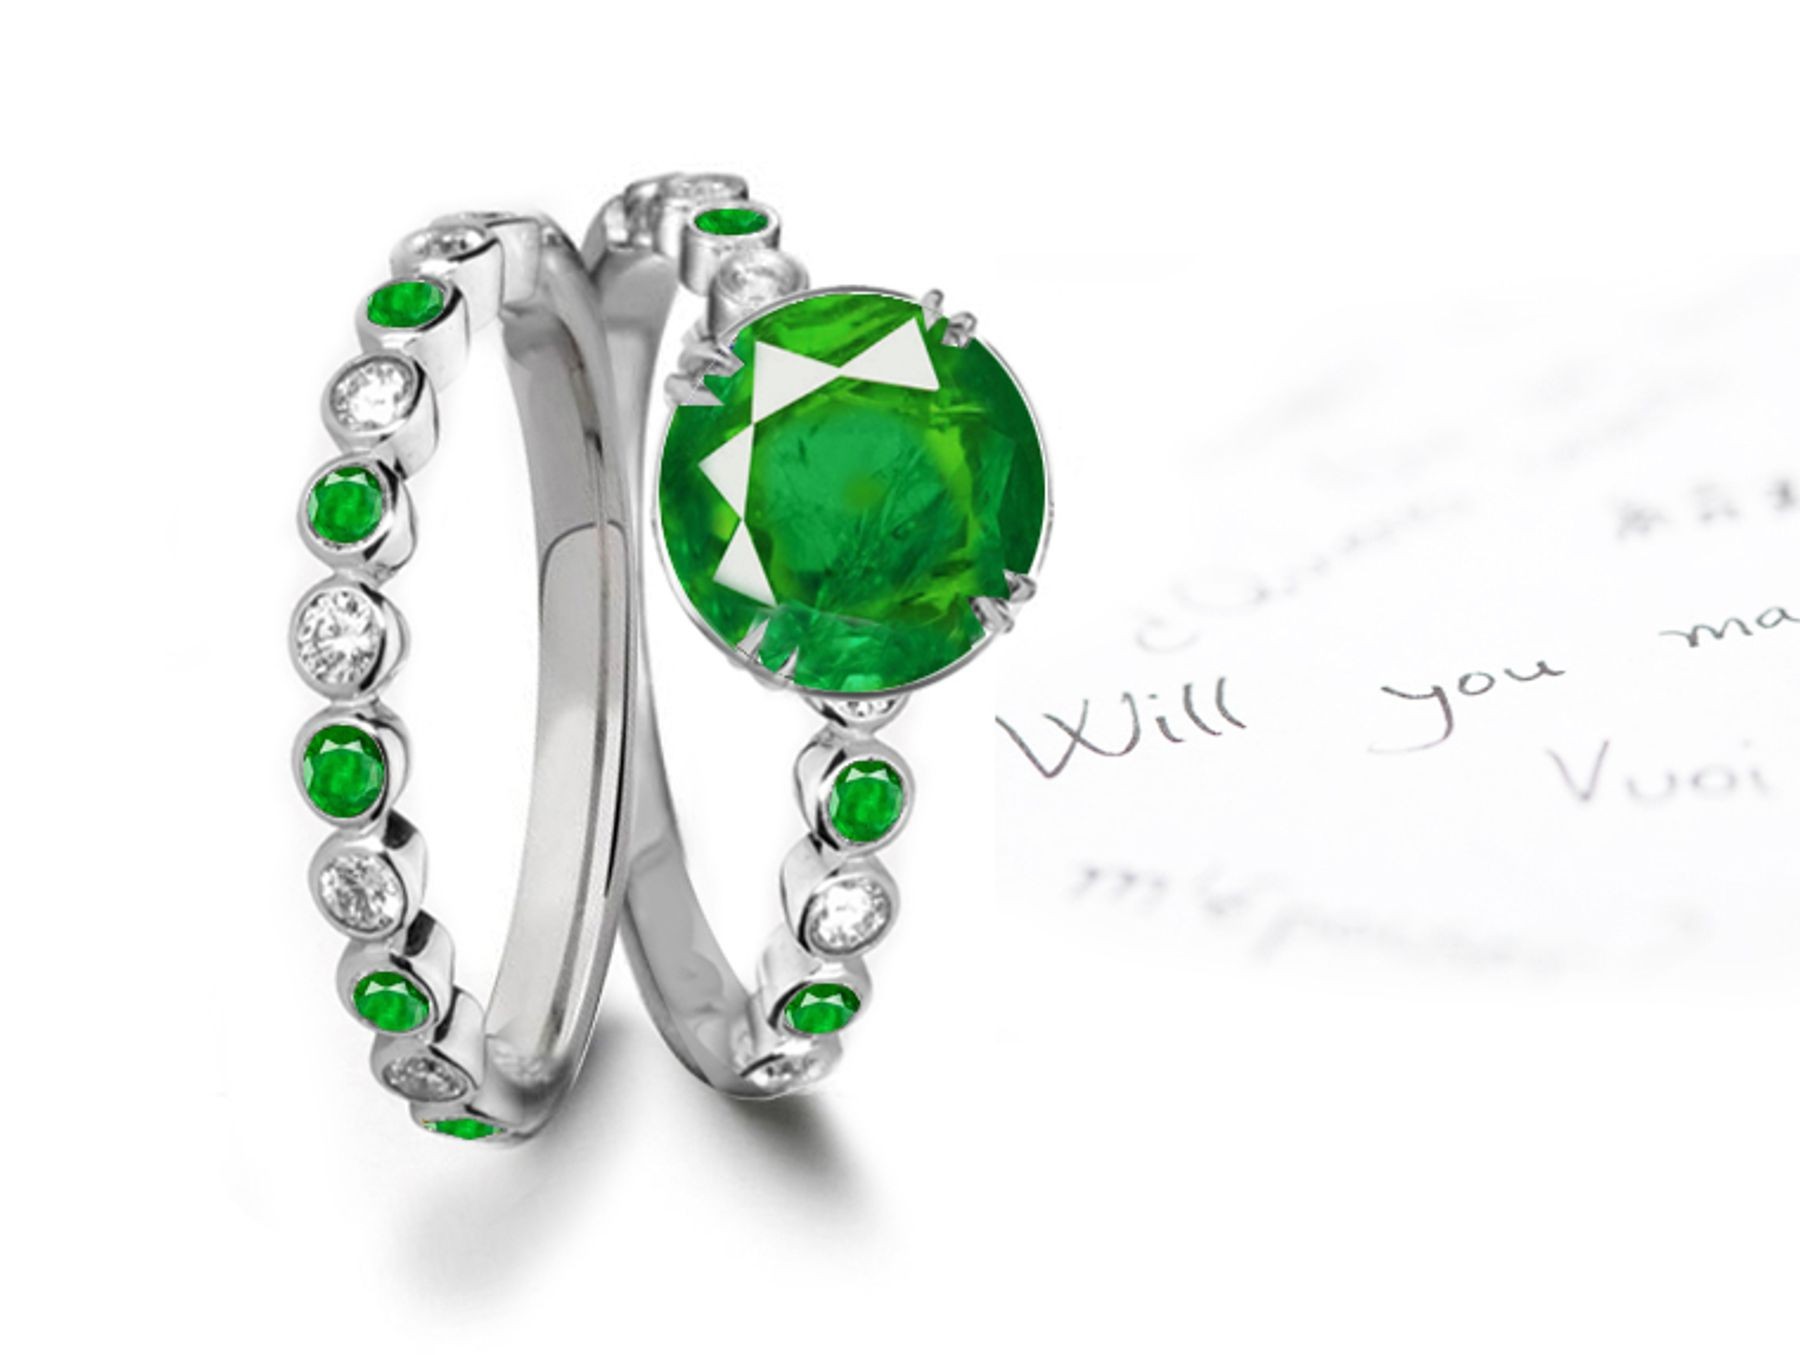 Treasures of Nature: Bezel Set Emerald Cut Diamond Ring in Smooth, Polished 14k White Gold & Enduring Tested Platinum